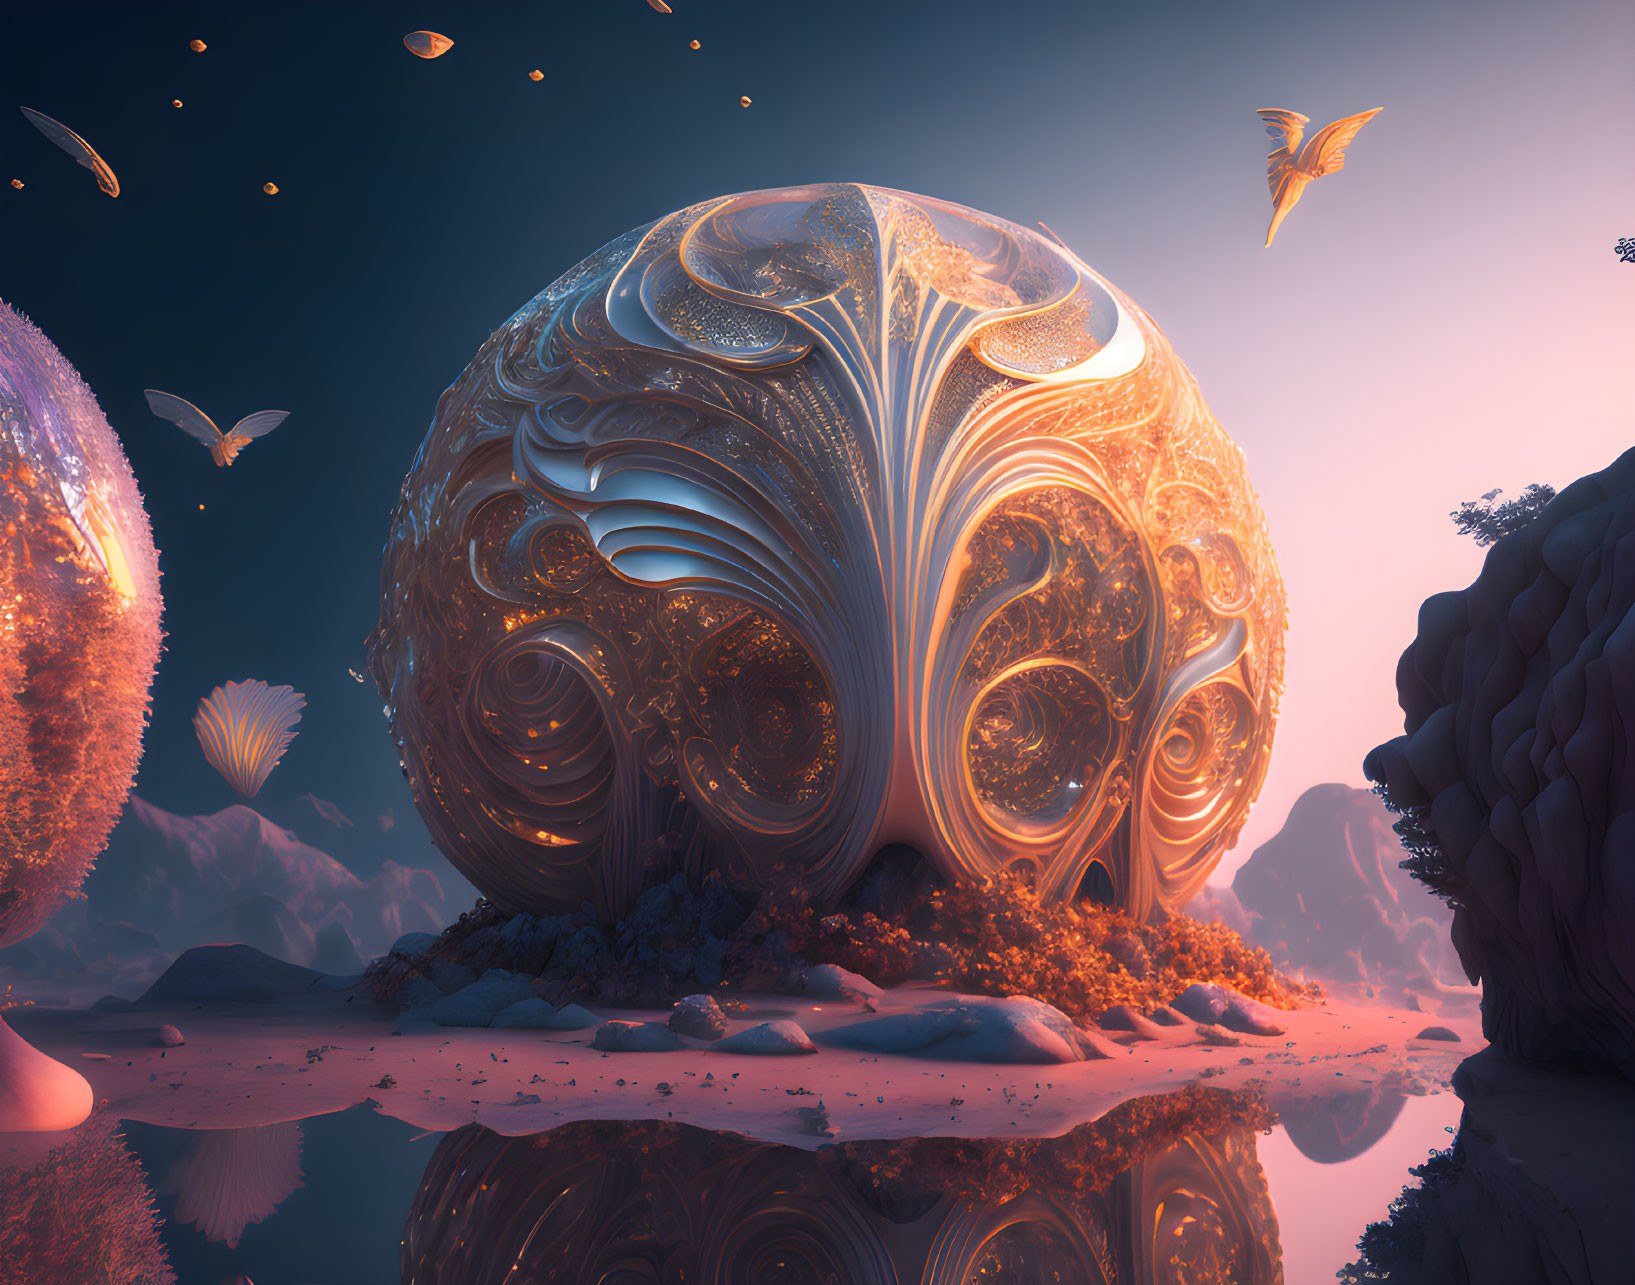 Ornate orb structure in surreal twilight landscape